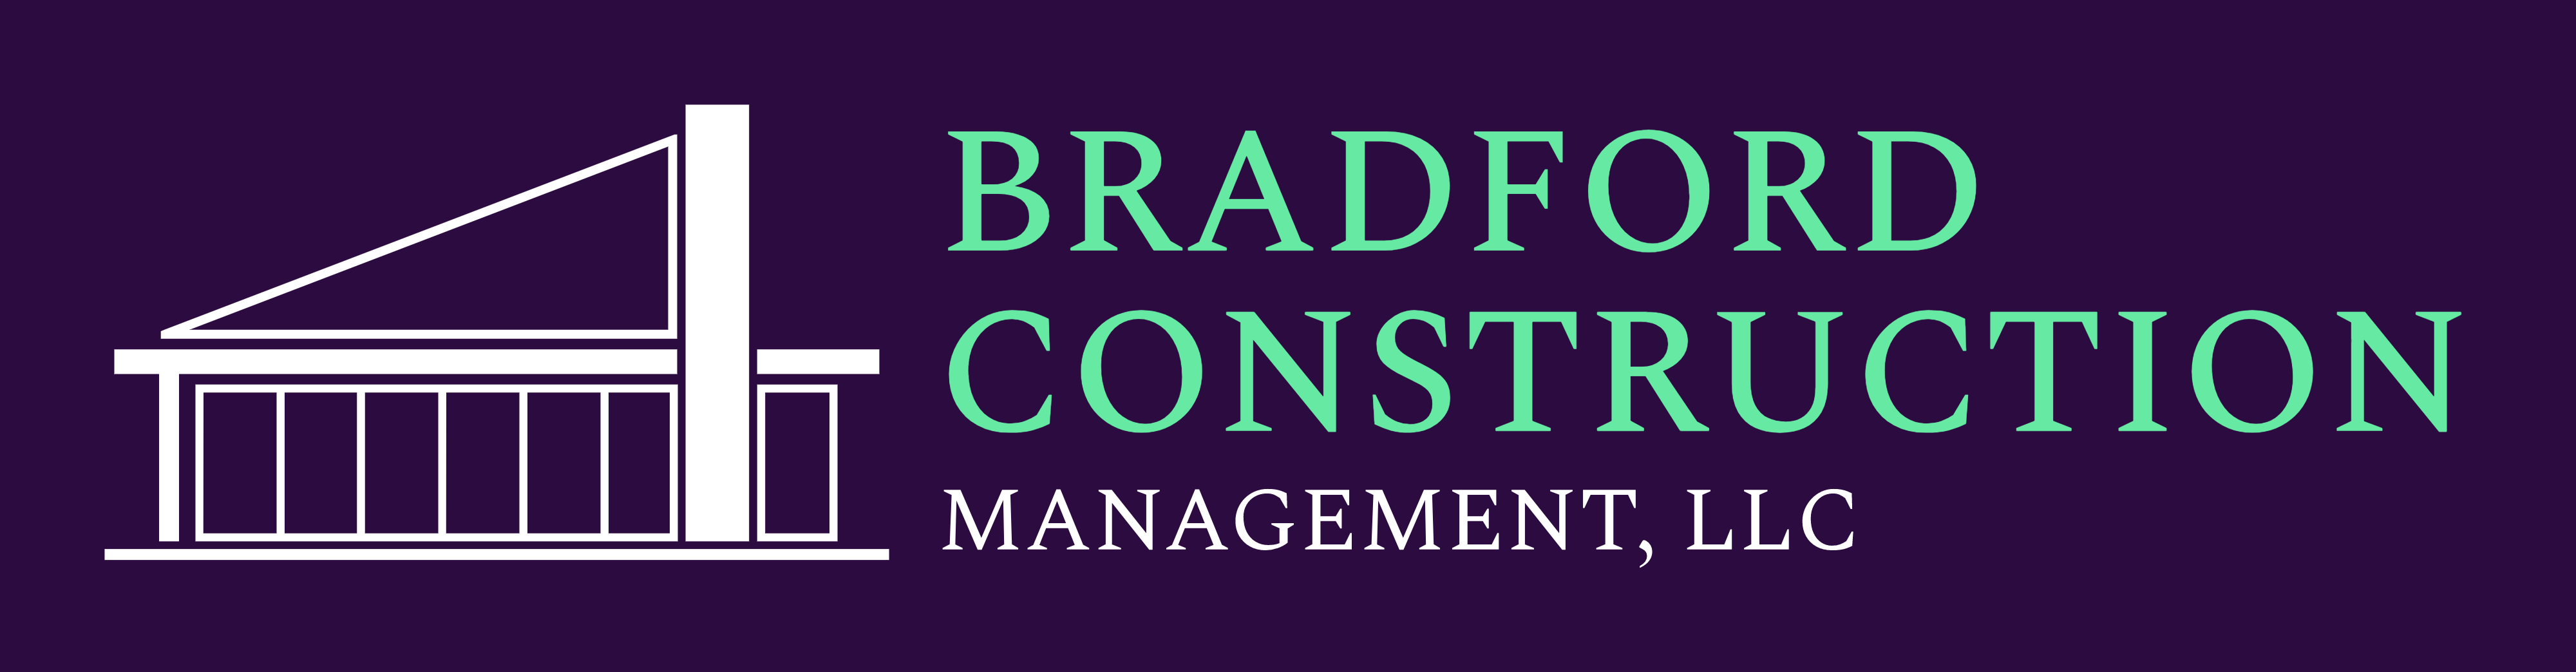 Bradford Construction Management, LLC Logo